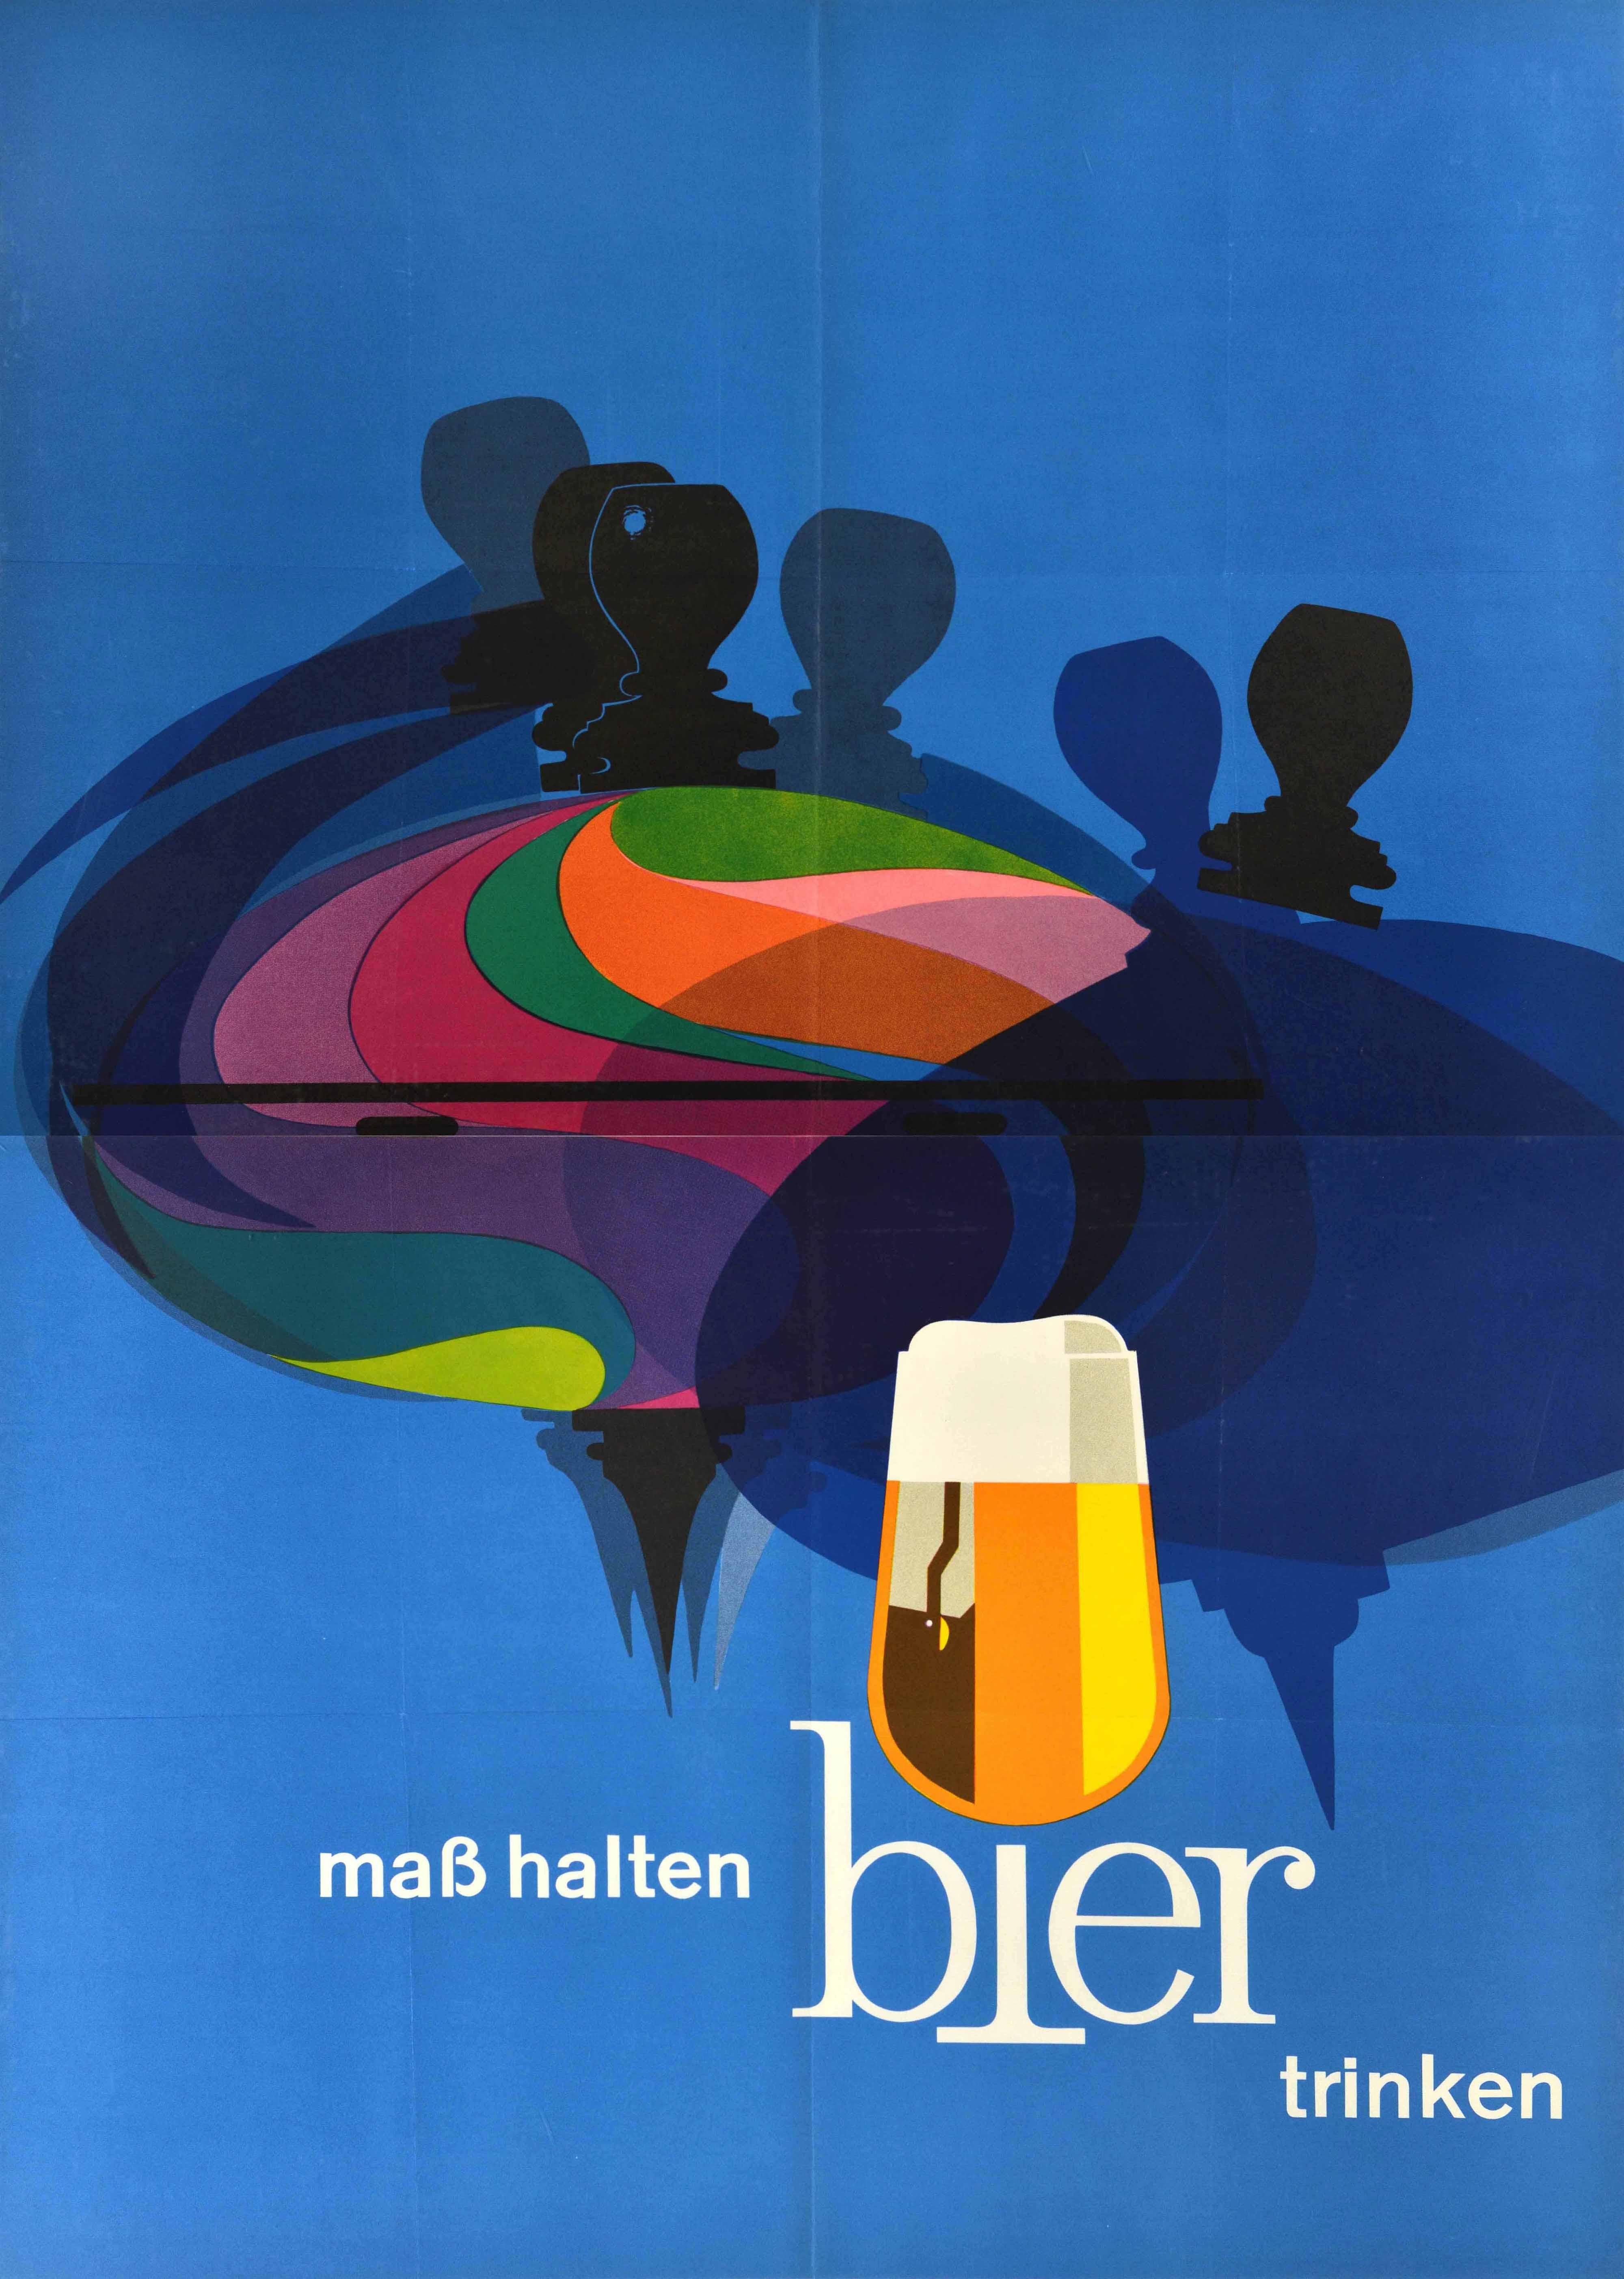 Unknown Print - Original Vintage Advertising Poster Drink Beer Moderately Spinning Top Toy Bier